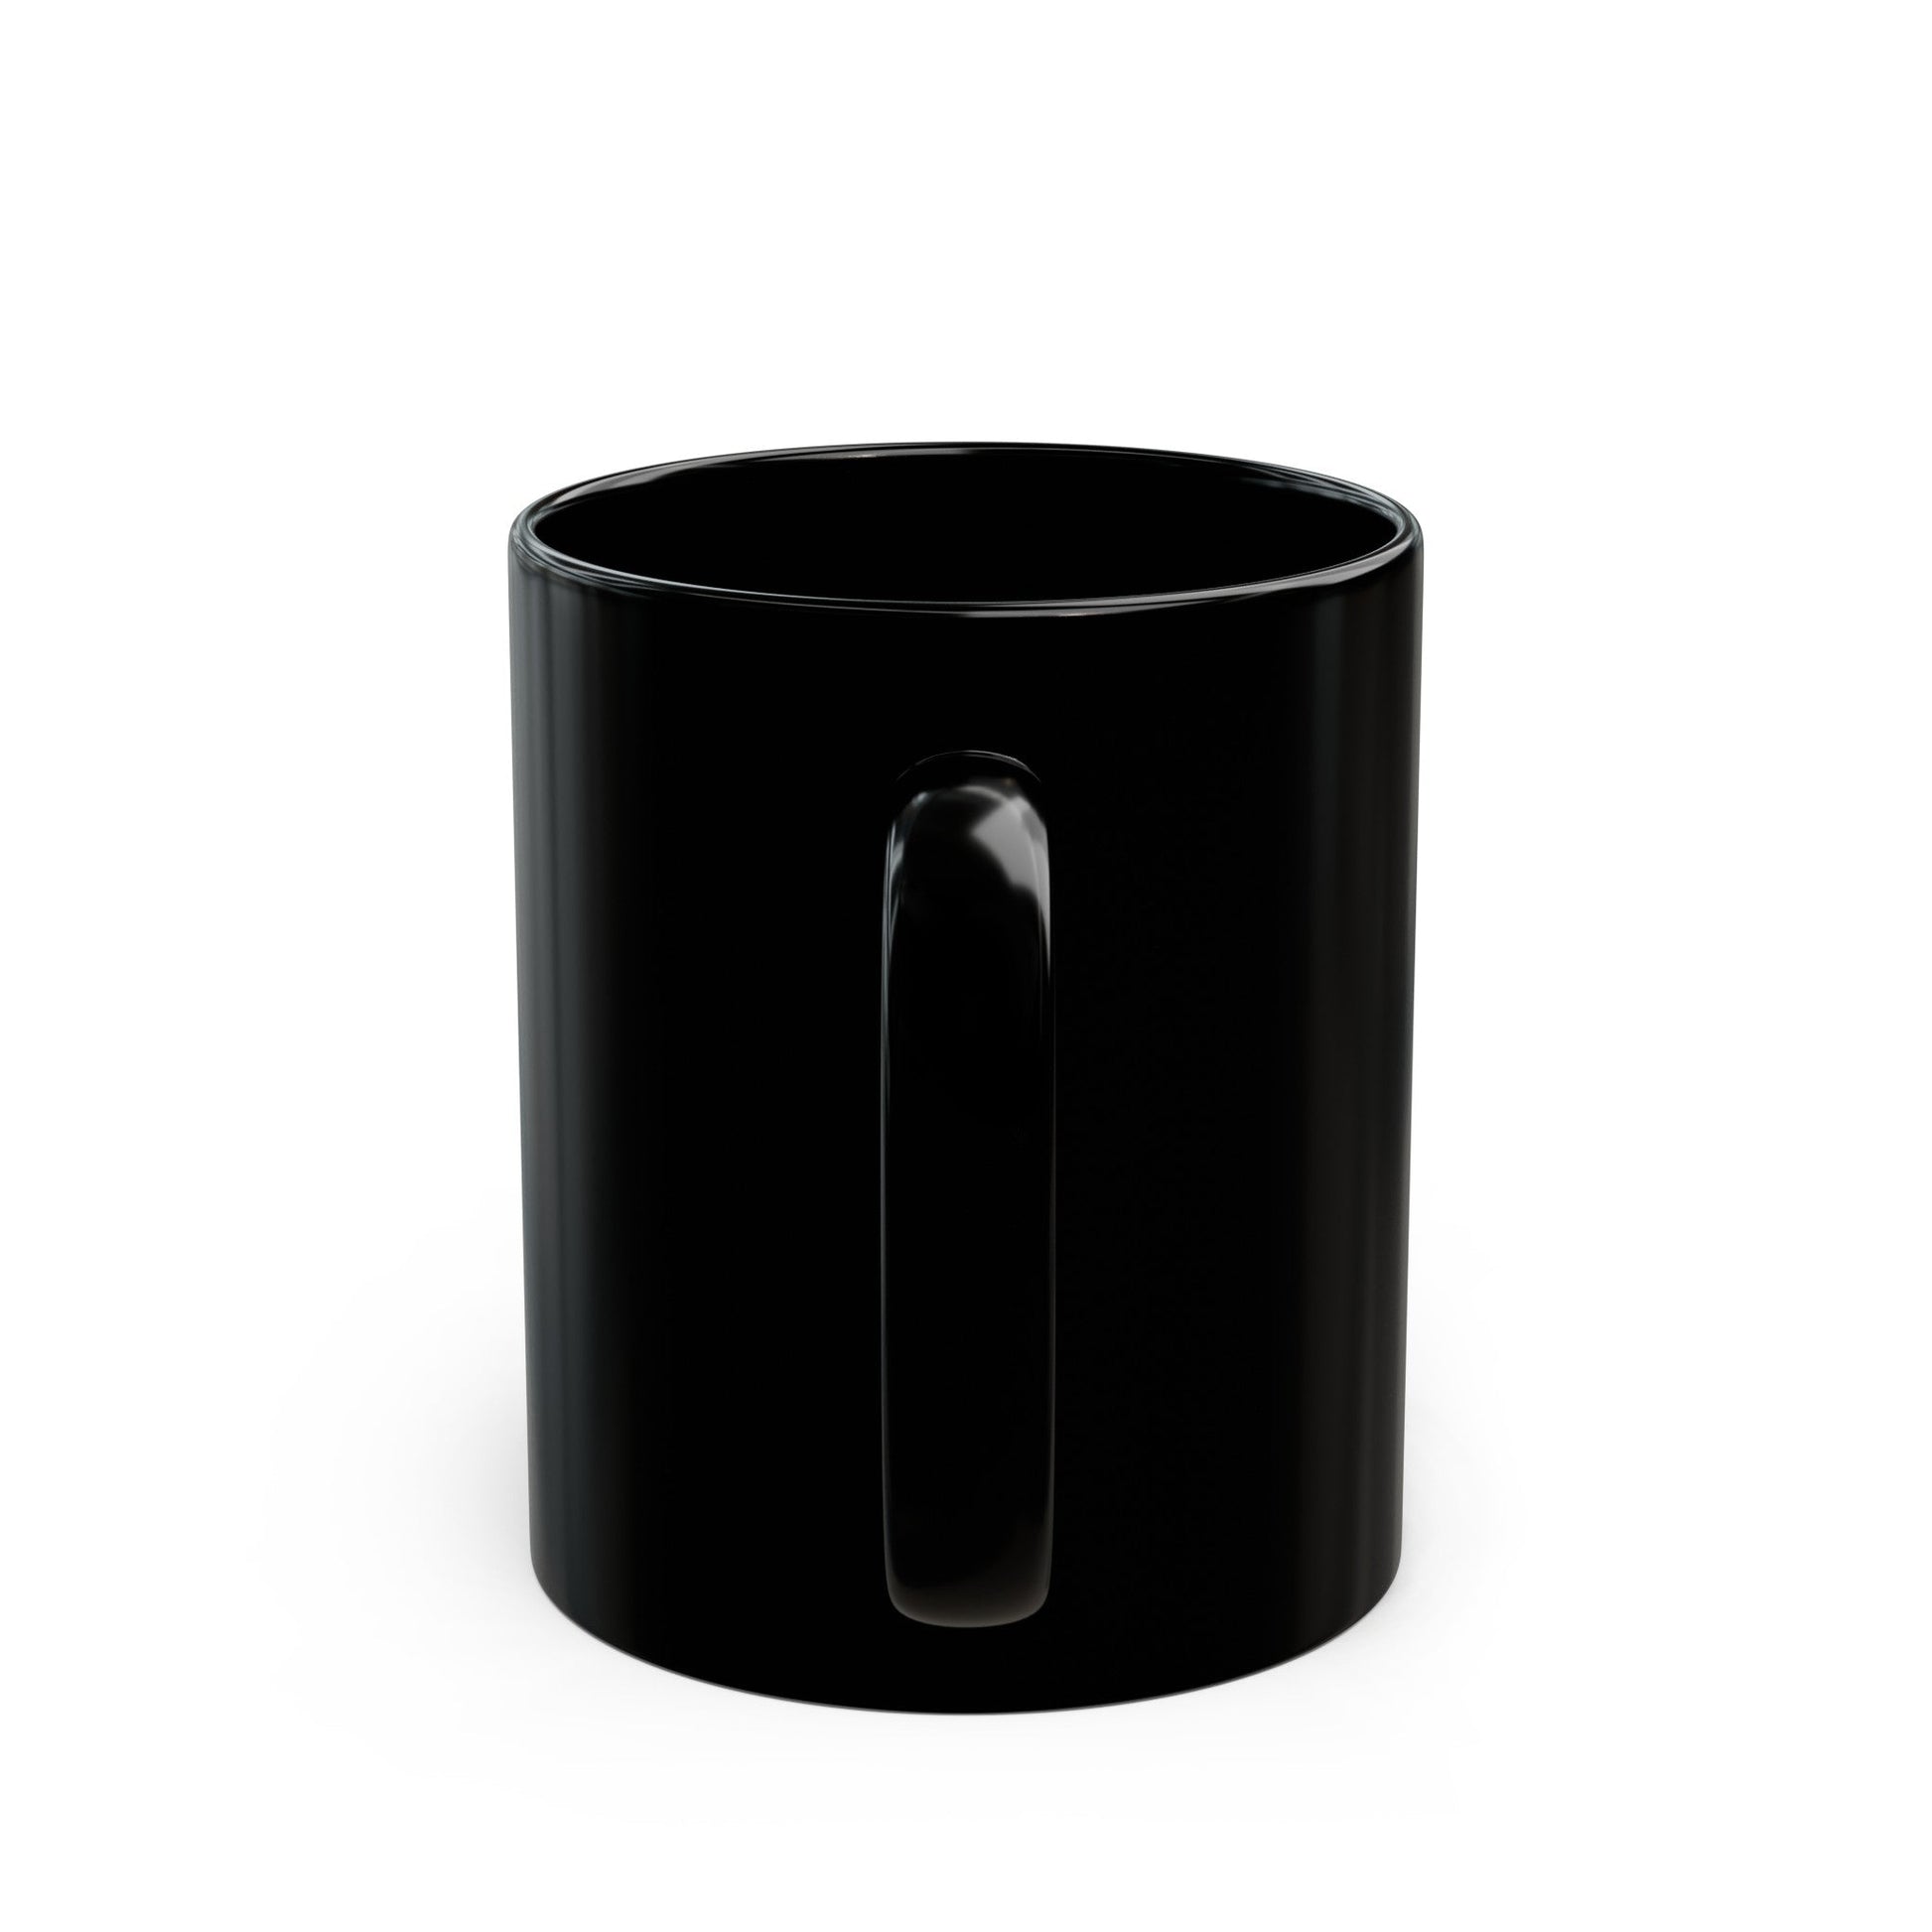 VMU 1 Watchdogs (USMC) Black Coffee Mug-The Sticker Space